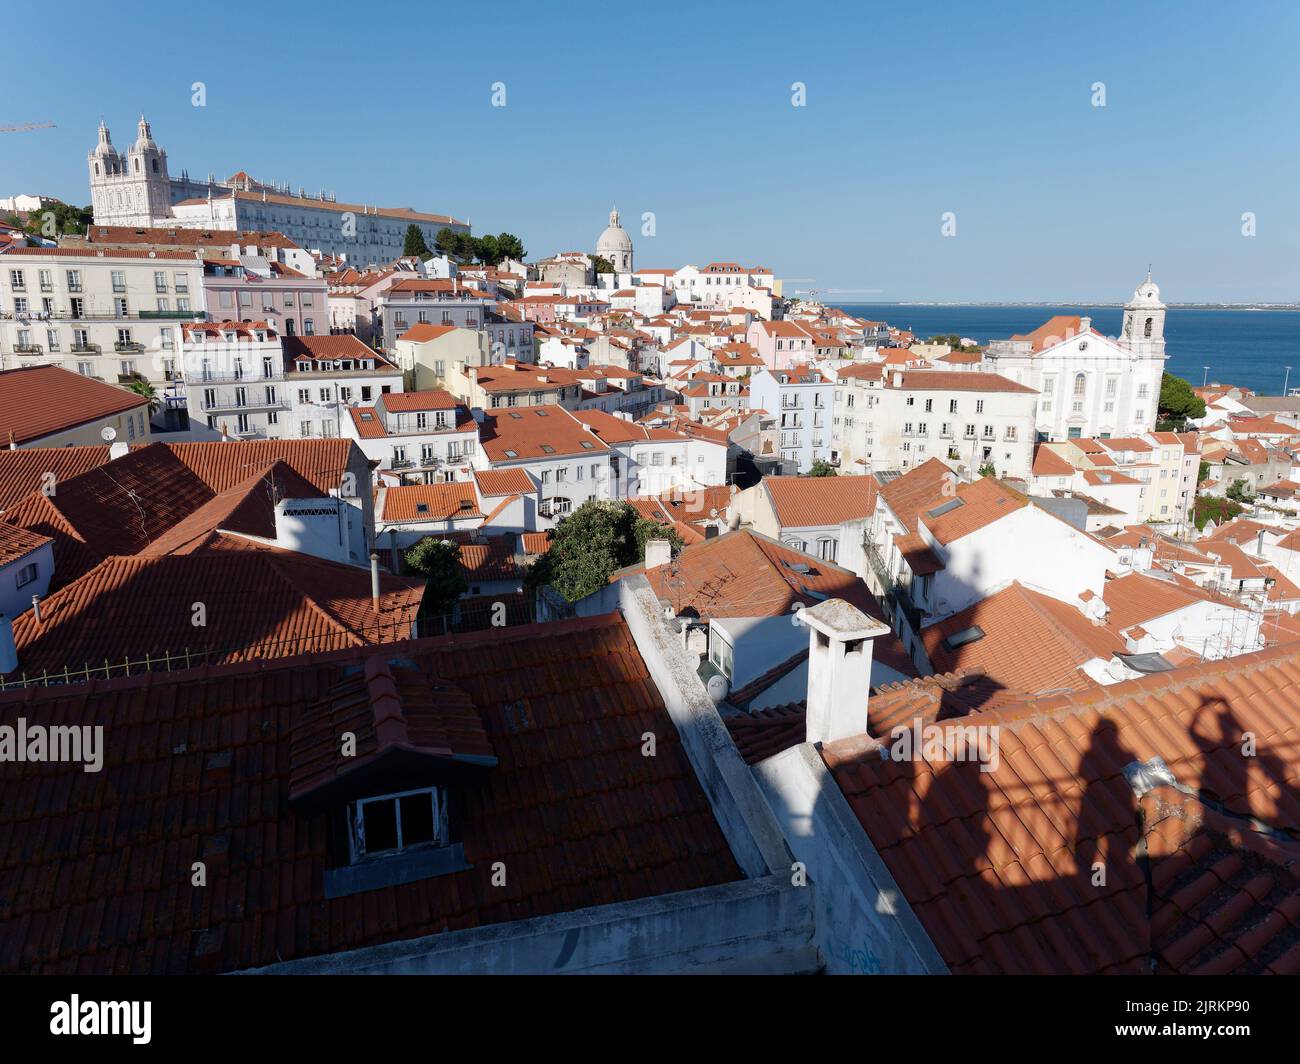 Vista dal punto di vista Miradouro das Portas do Sol a Lisbona Portogallo. Fiume Tago a destra. Monastero di São Vicente de Fora in alto a sinistra. Foto Stock